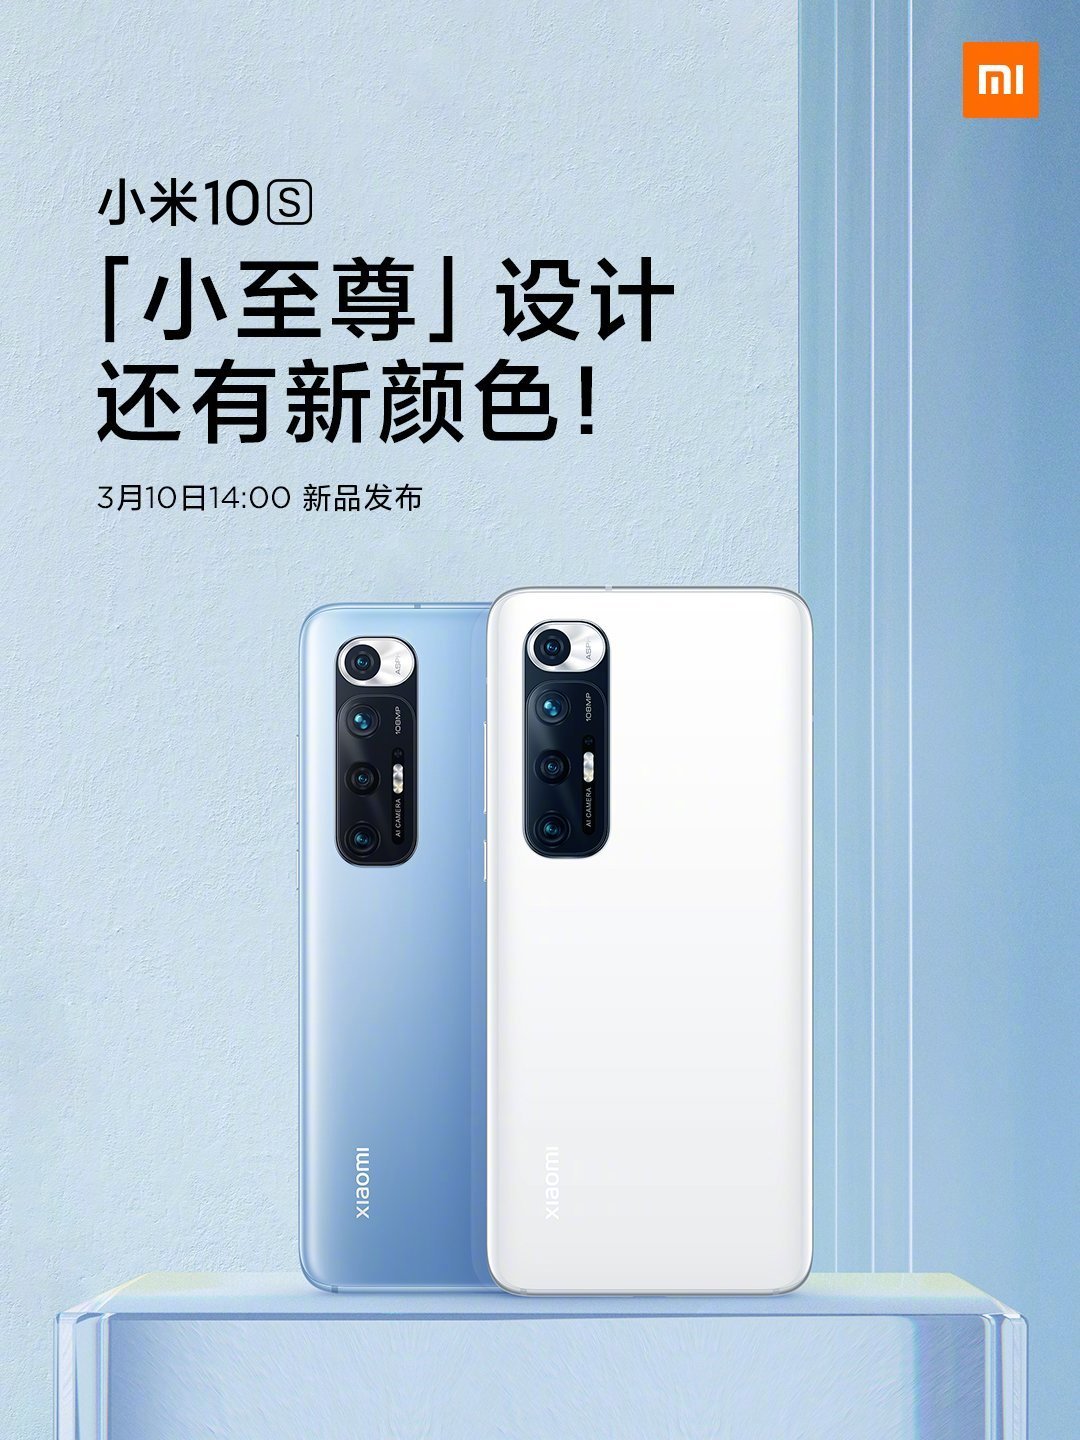 Xiaomi Mi 10S launch date poster-